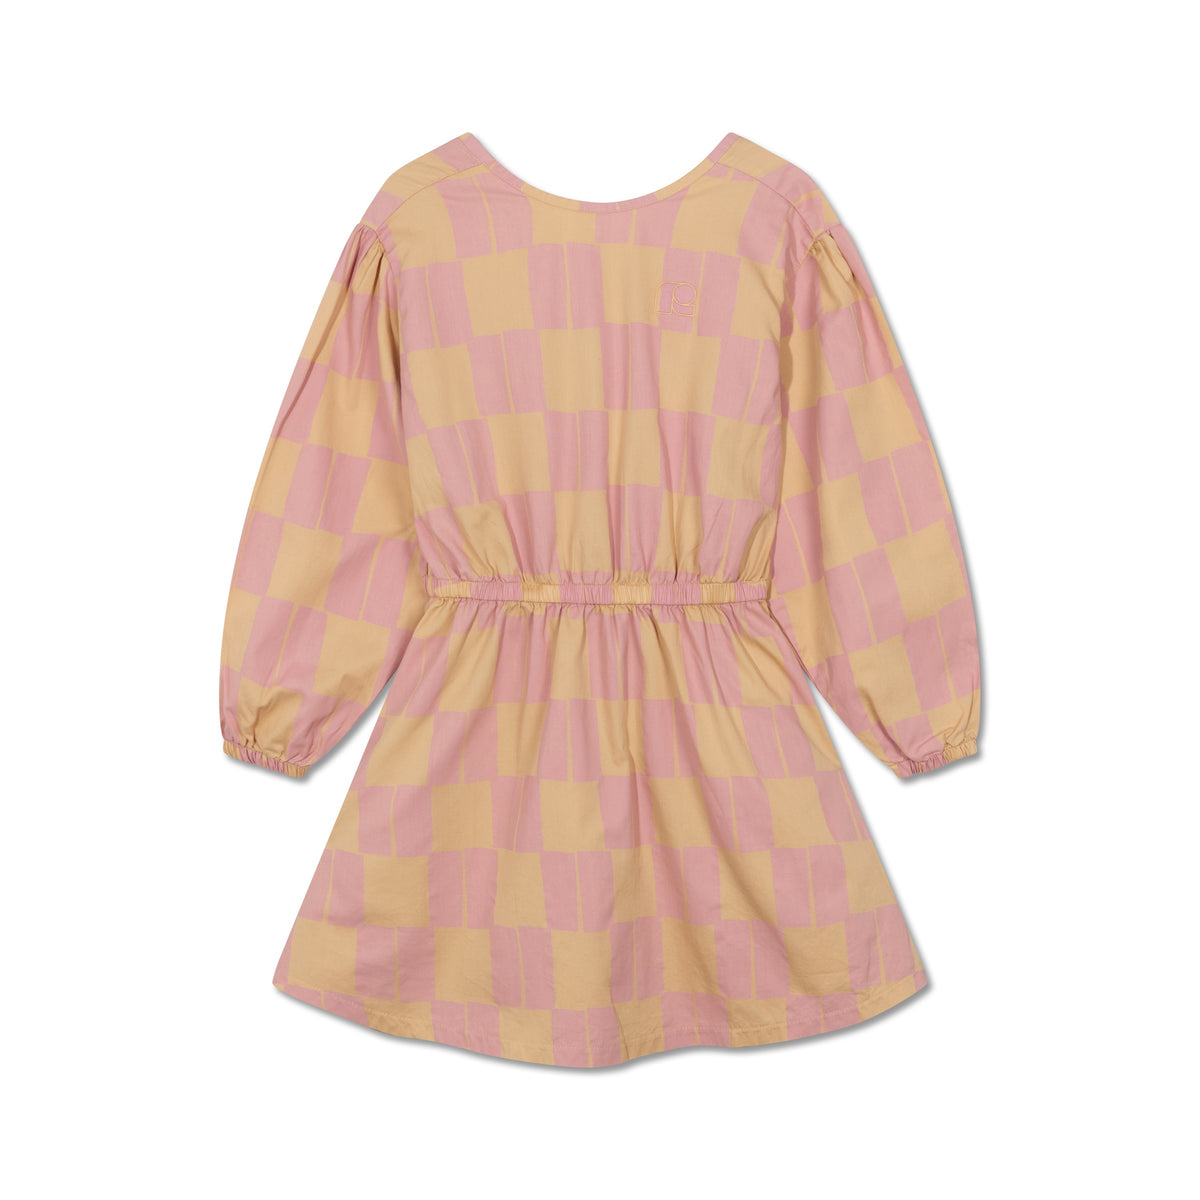 Repose AMS Violet Dress Soft Pink Tiles